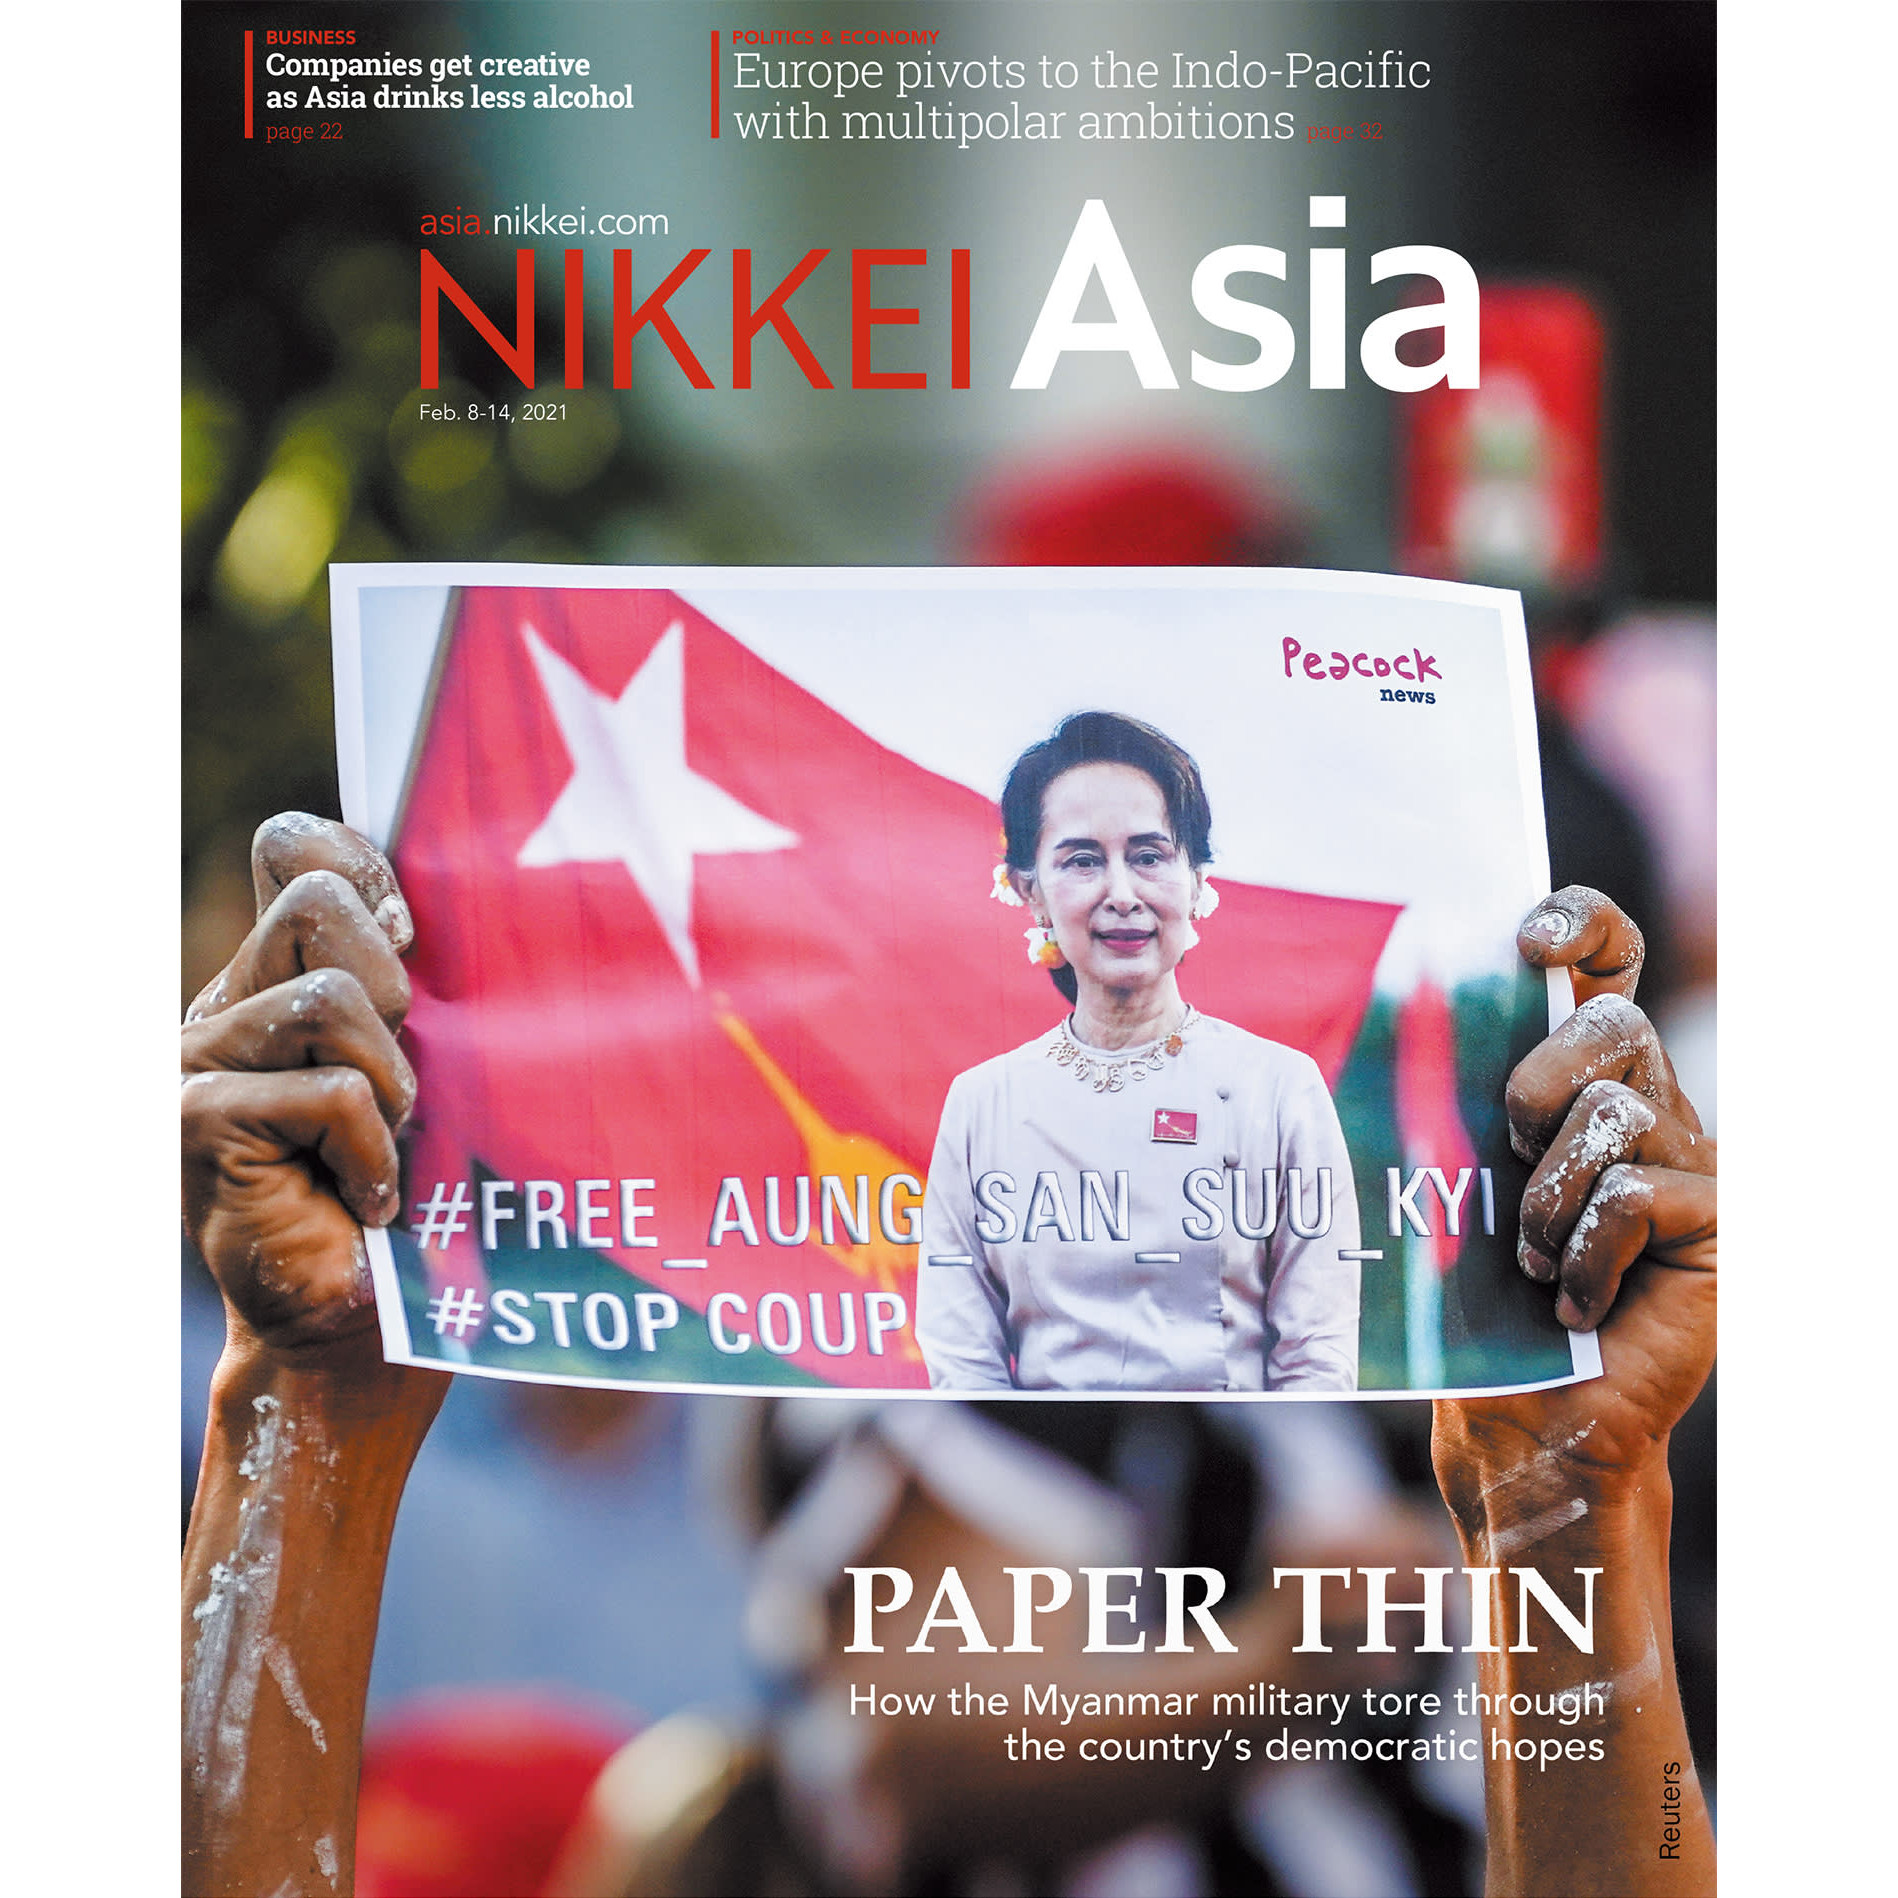 Nikkei Asian Review: Nikkei Asia - 2021: PAPER THIN - 6.20, tạp chí kinh tế nước ngoài, nhập khẩu từ Singapore